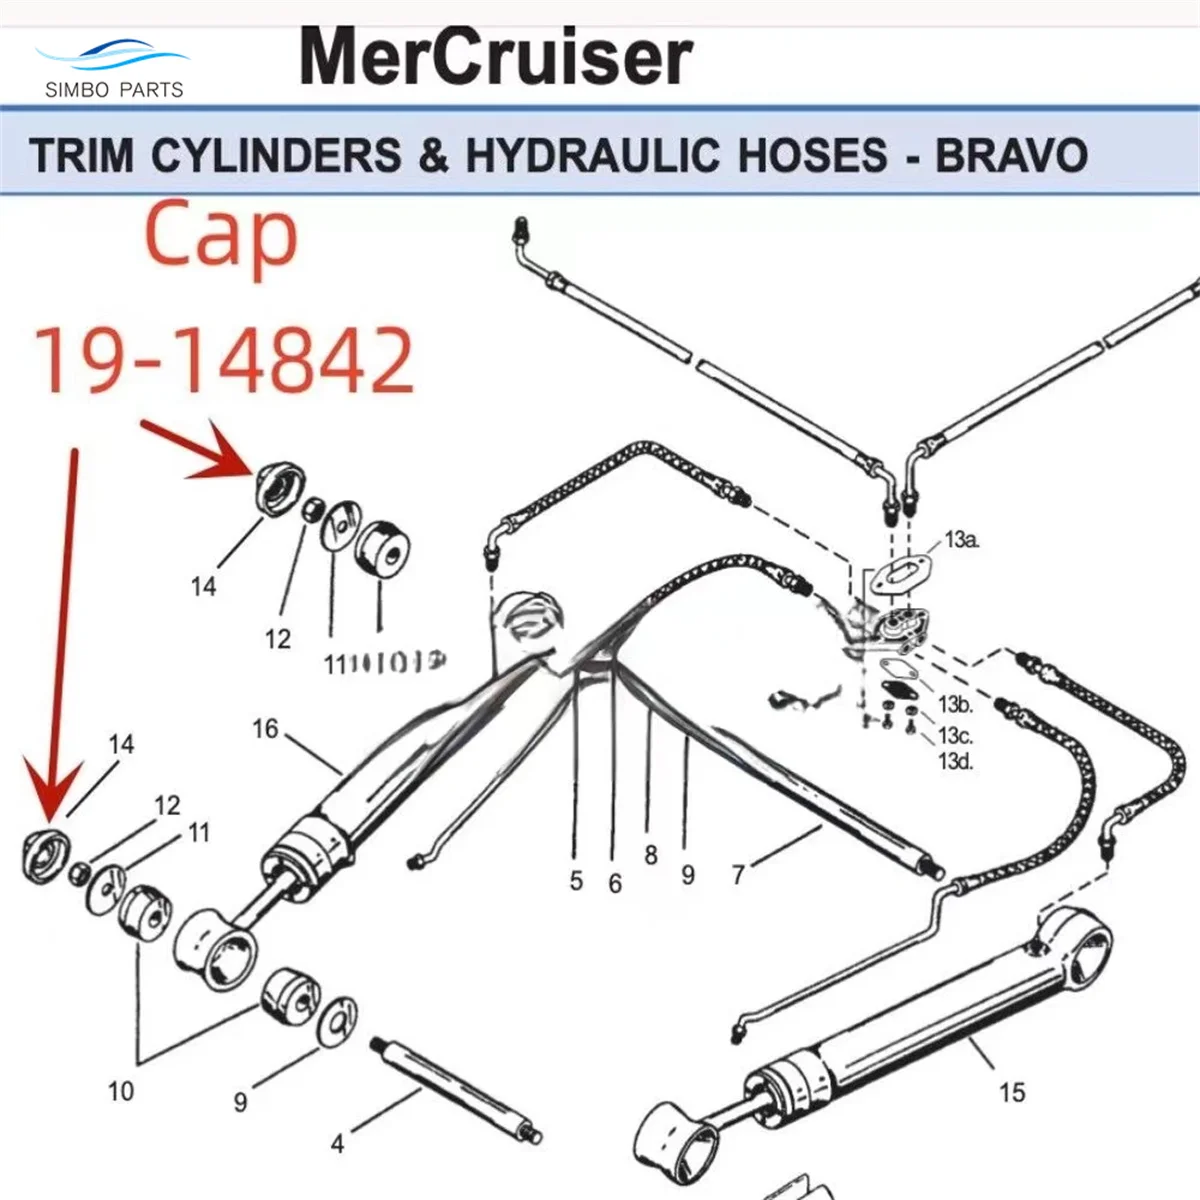 4 PCS 19-148421 19-14842 Trim Cylinder Ram End Cap For Mercruiser Bravo R MR ALPHA ONE Sierra 18-2465-9